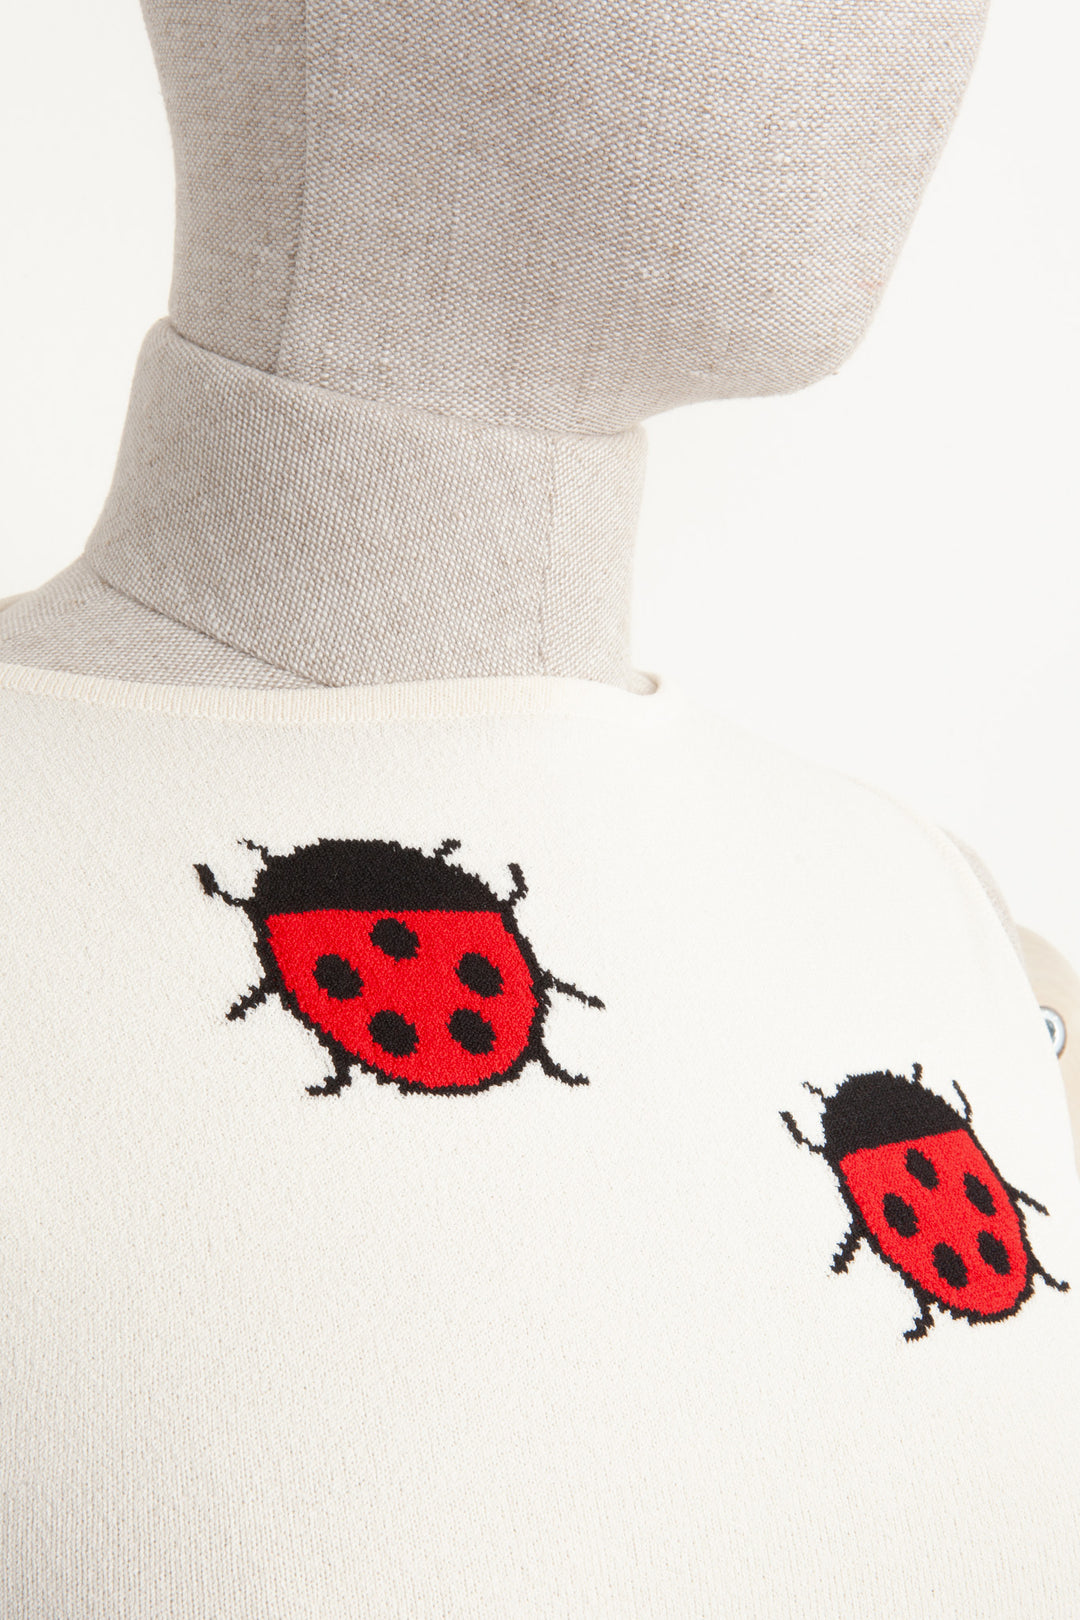 CHANEL Ladybug Knit Top White